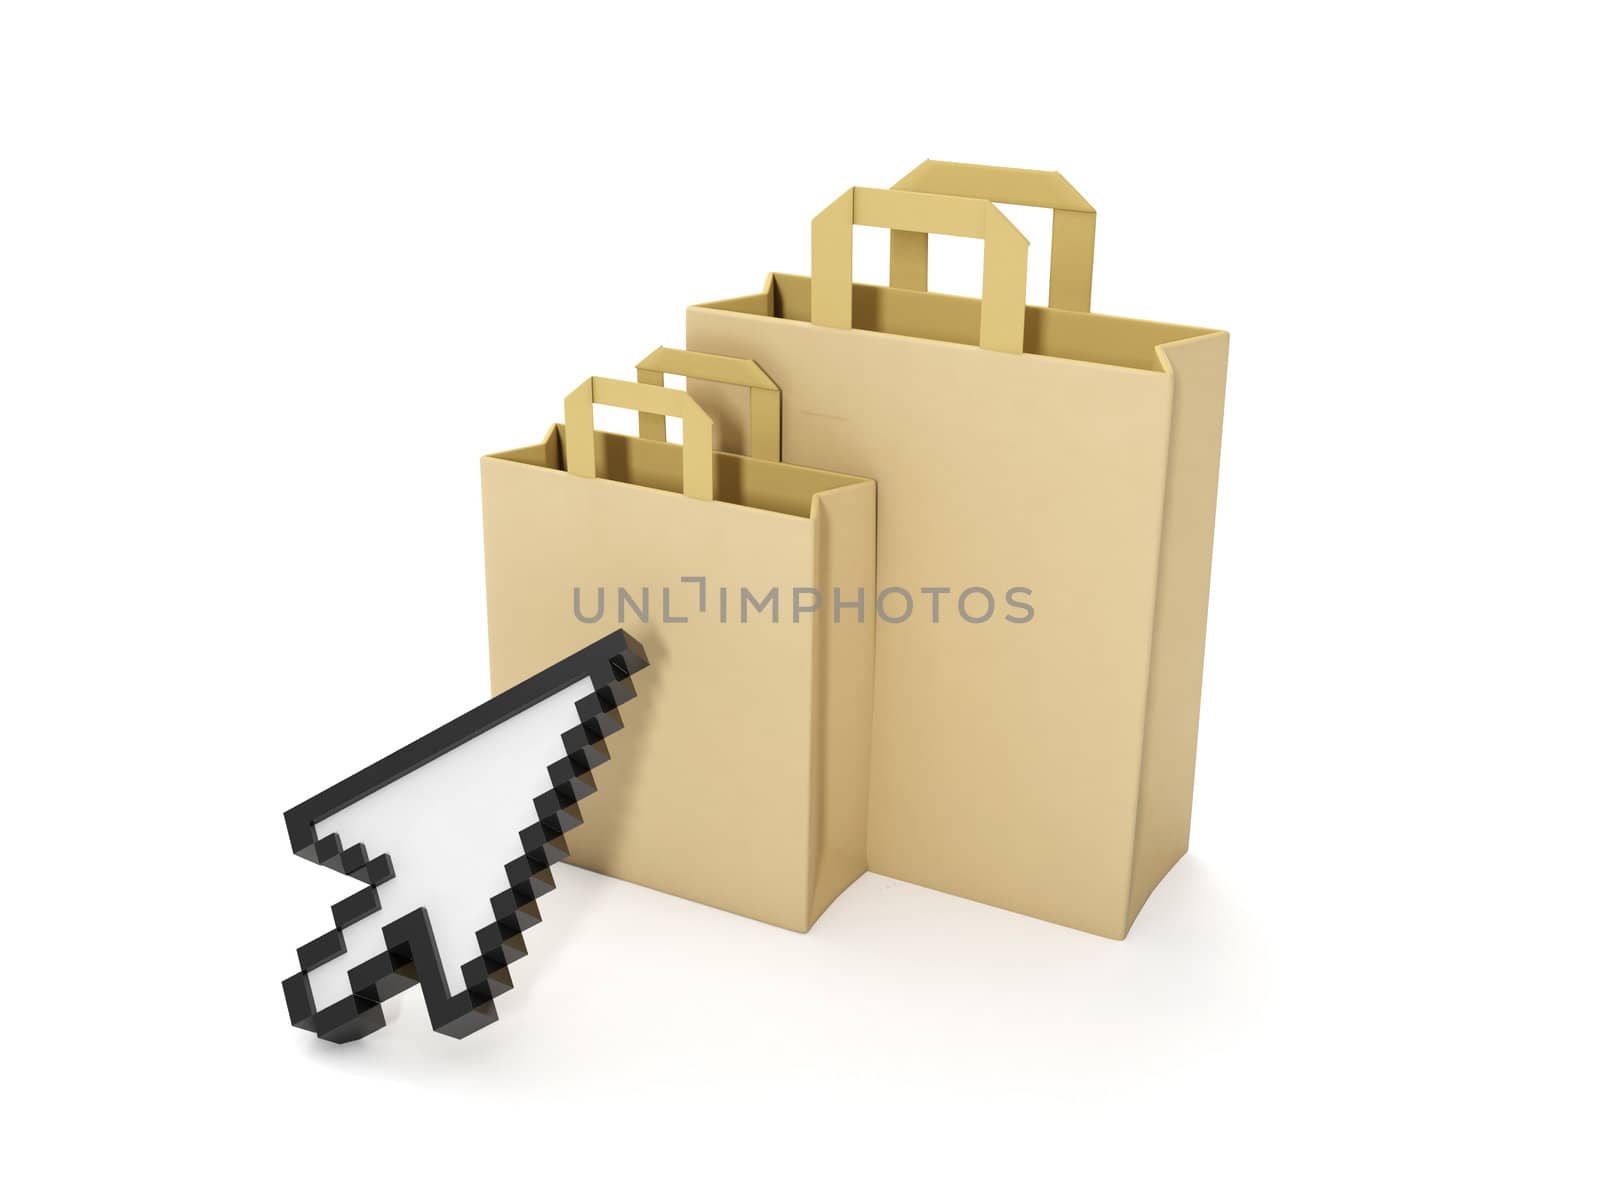 3d illustration: Purchase of goods via the Internet. online Shop